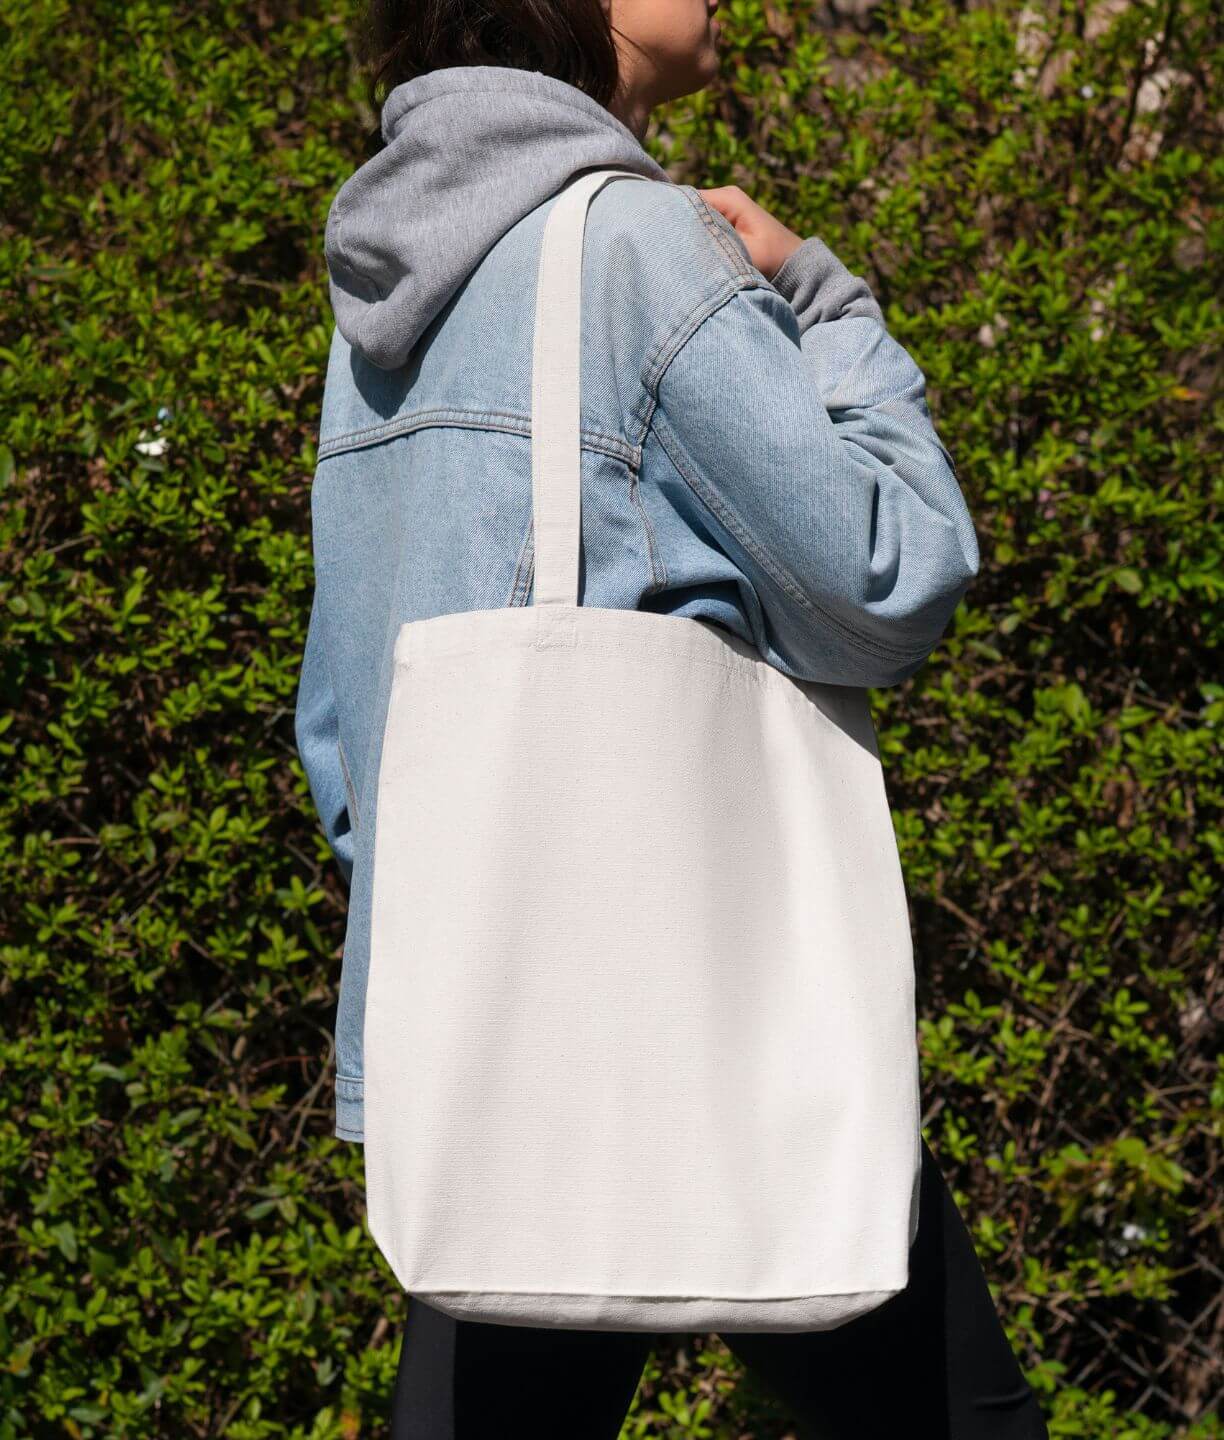 Plain White Zipper Tote Bags Online in India